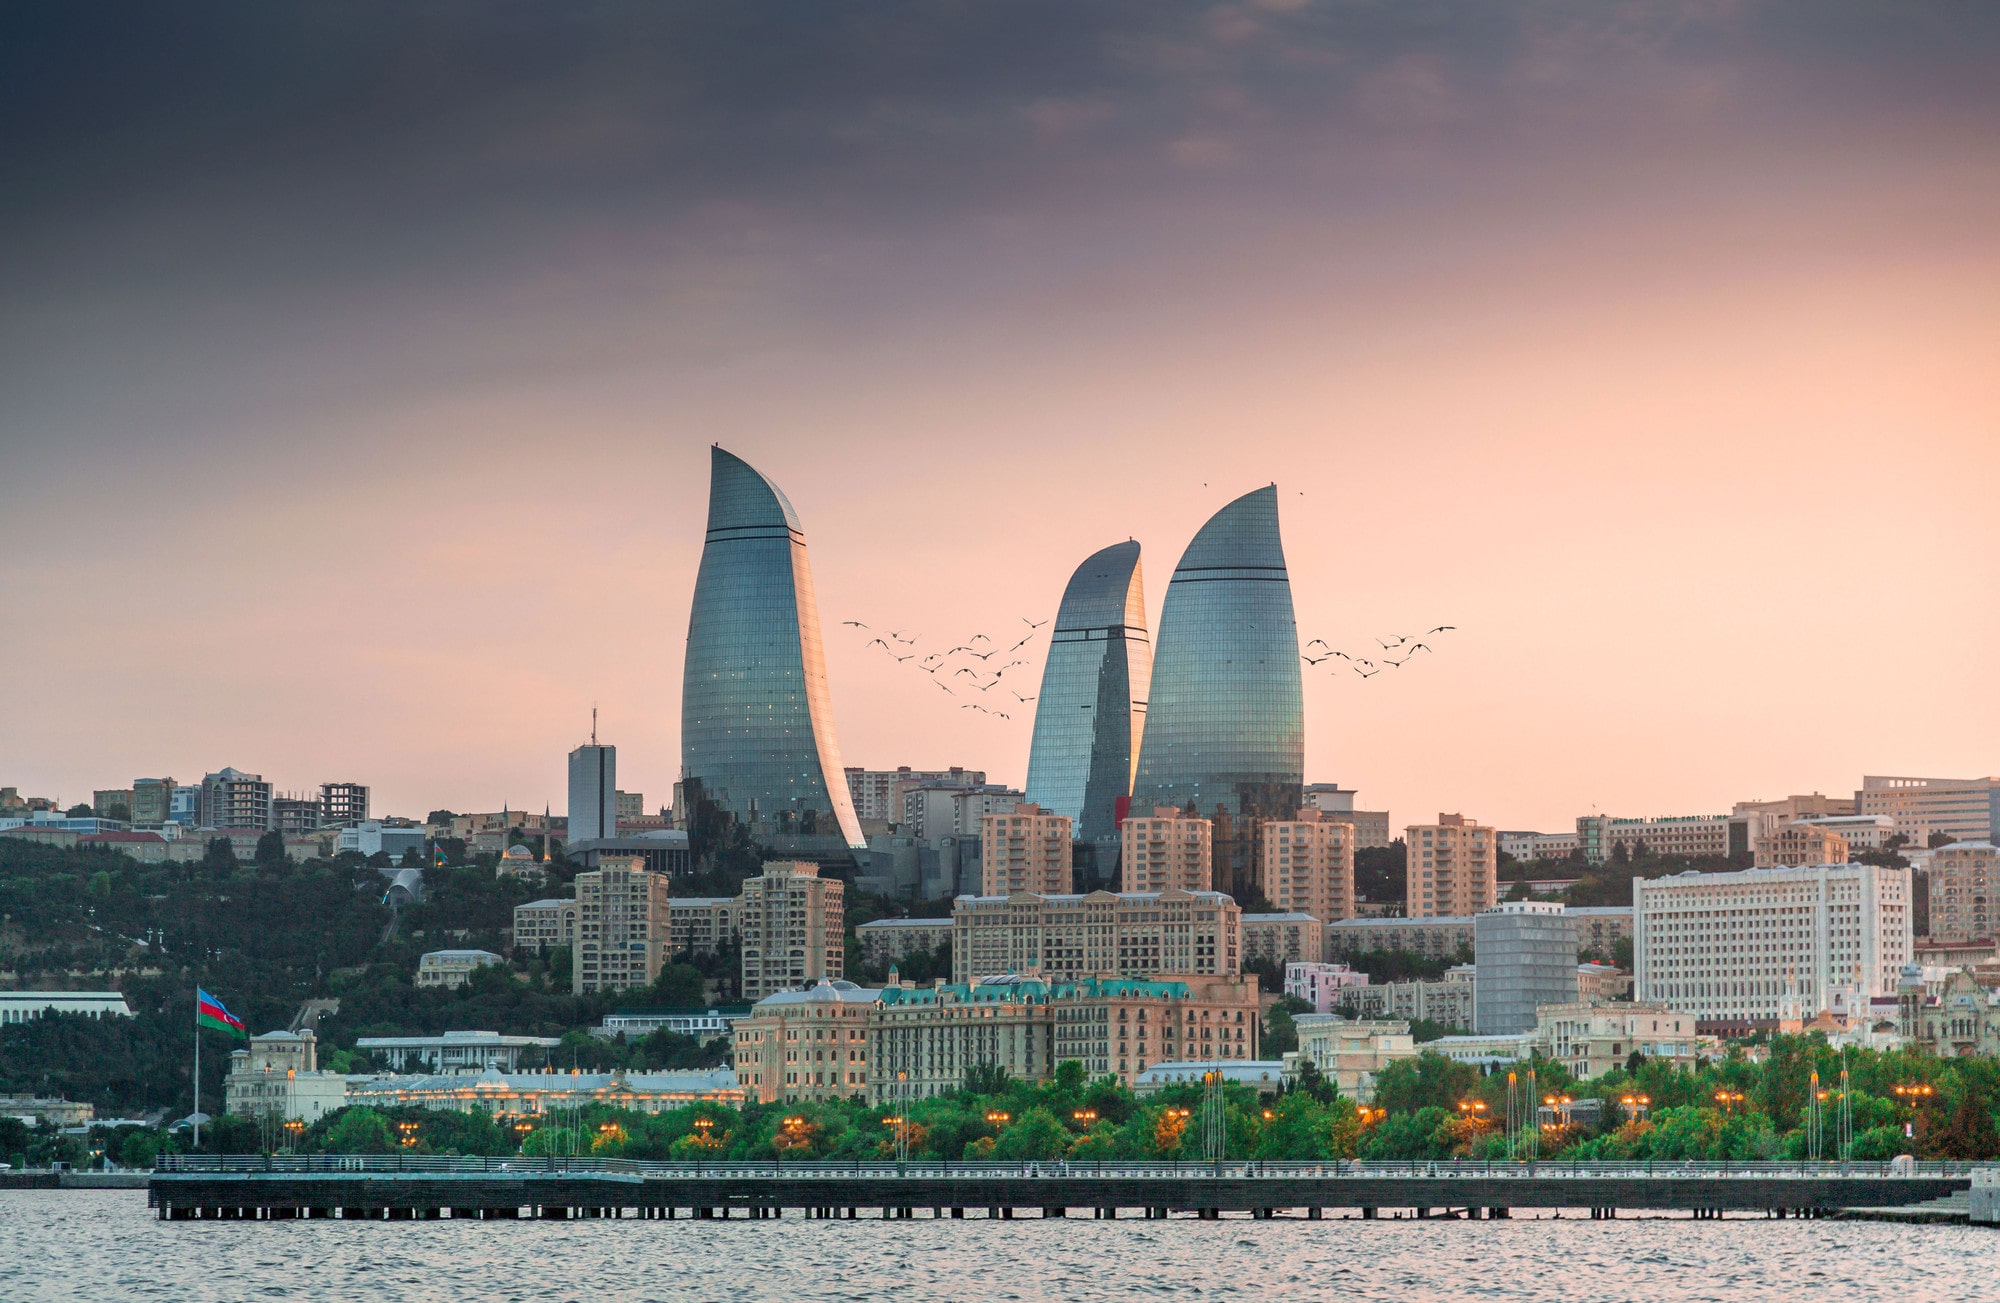 Apply to Azerbaijan visa online